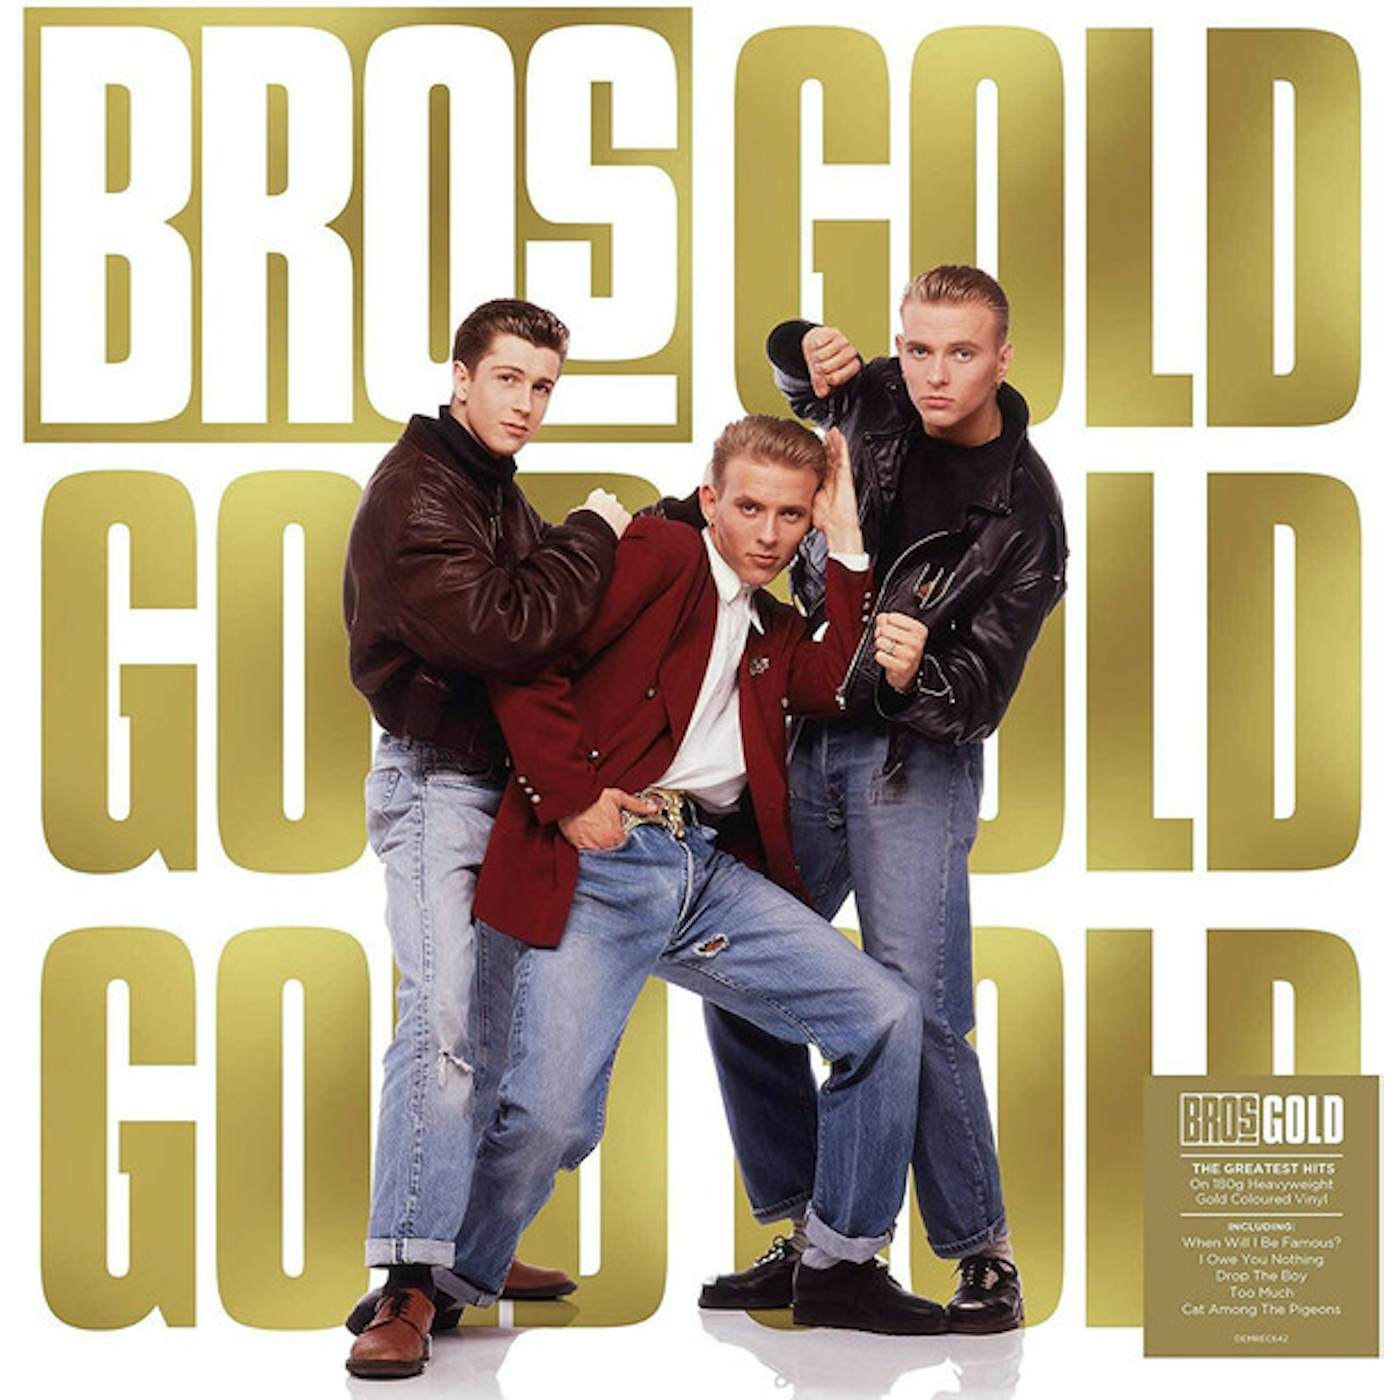 BROS Gold Vinyl Record